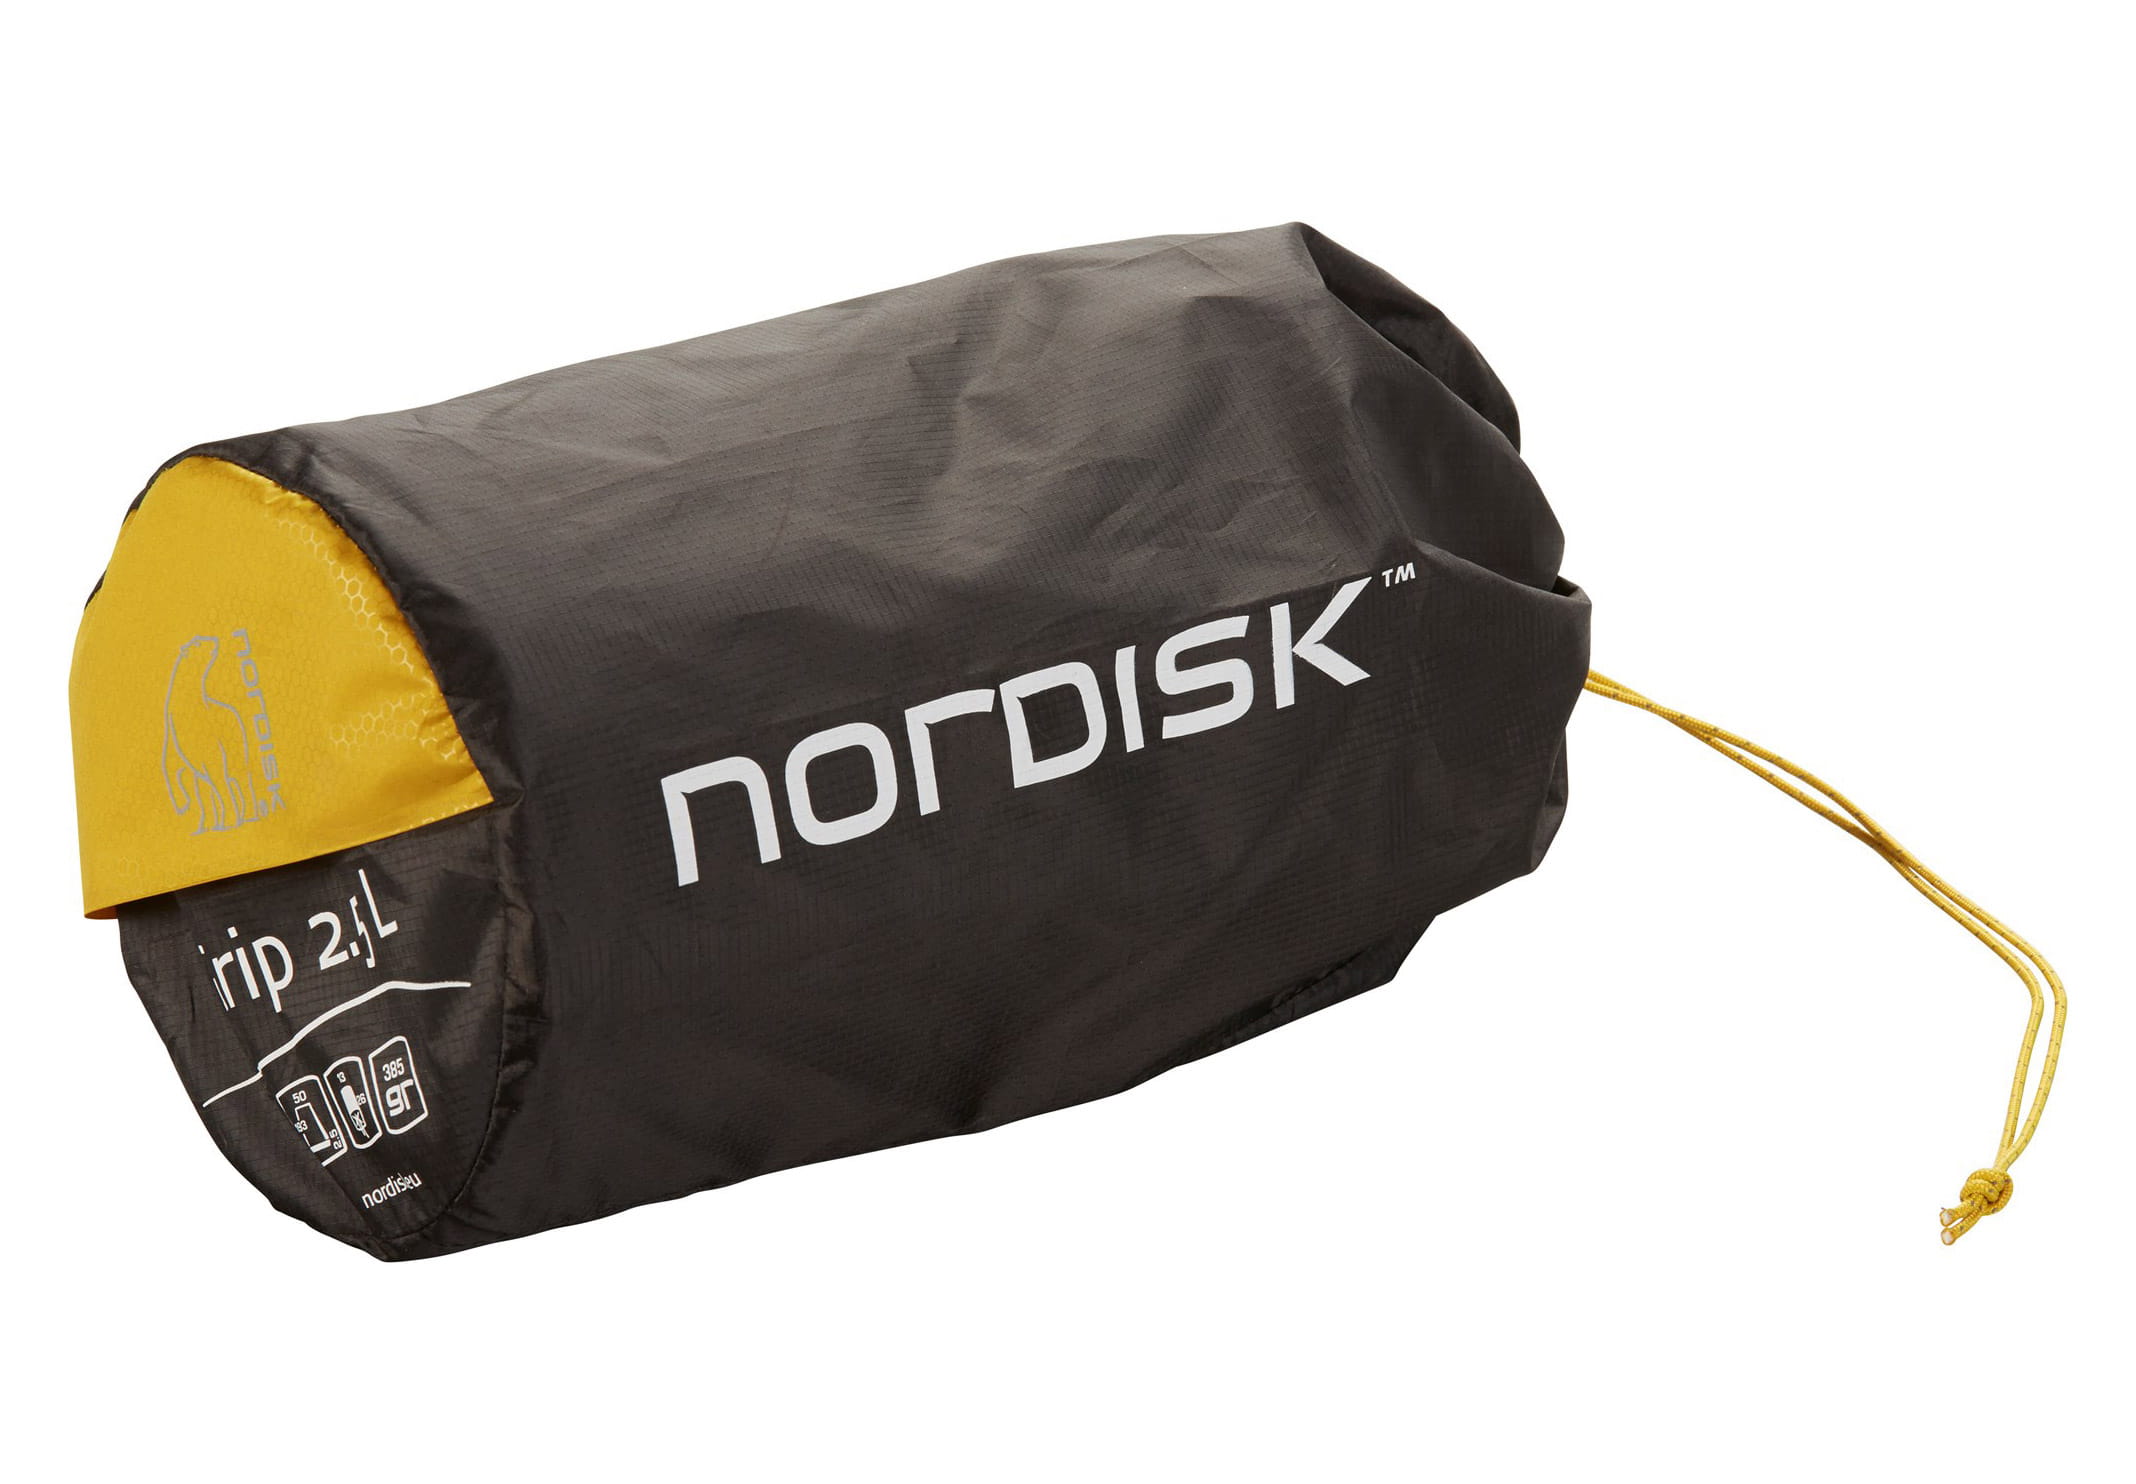 Nordisk Grip 2.5 Isomatte